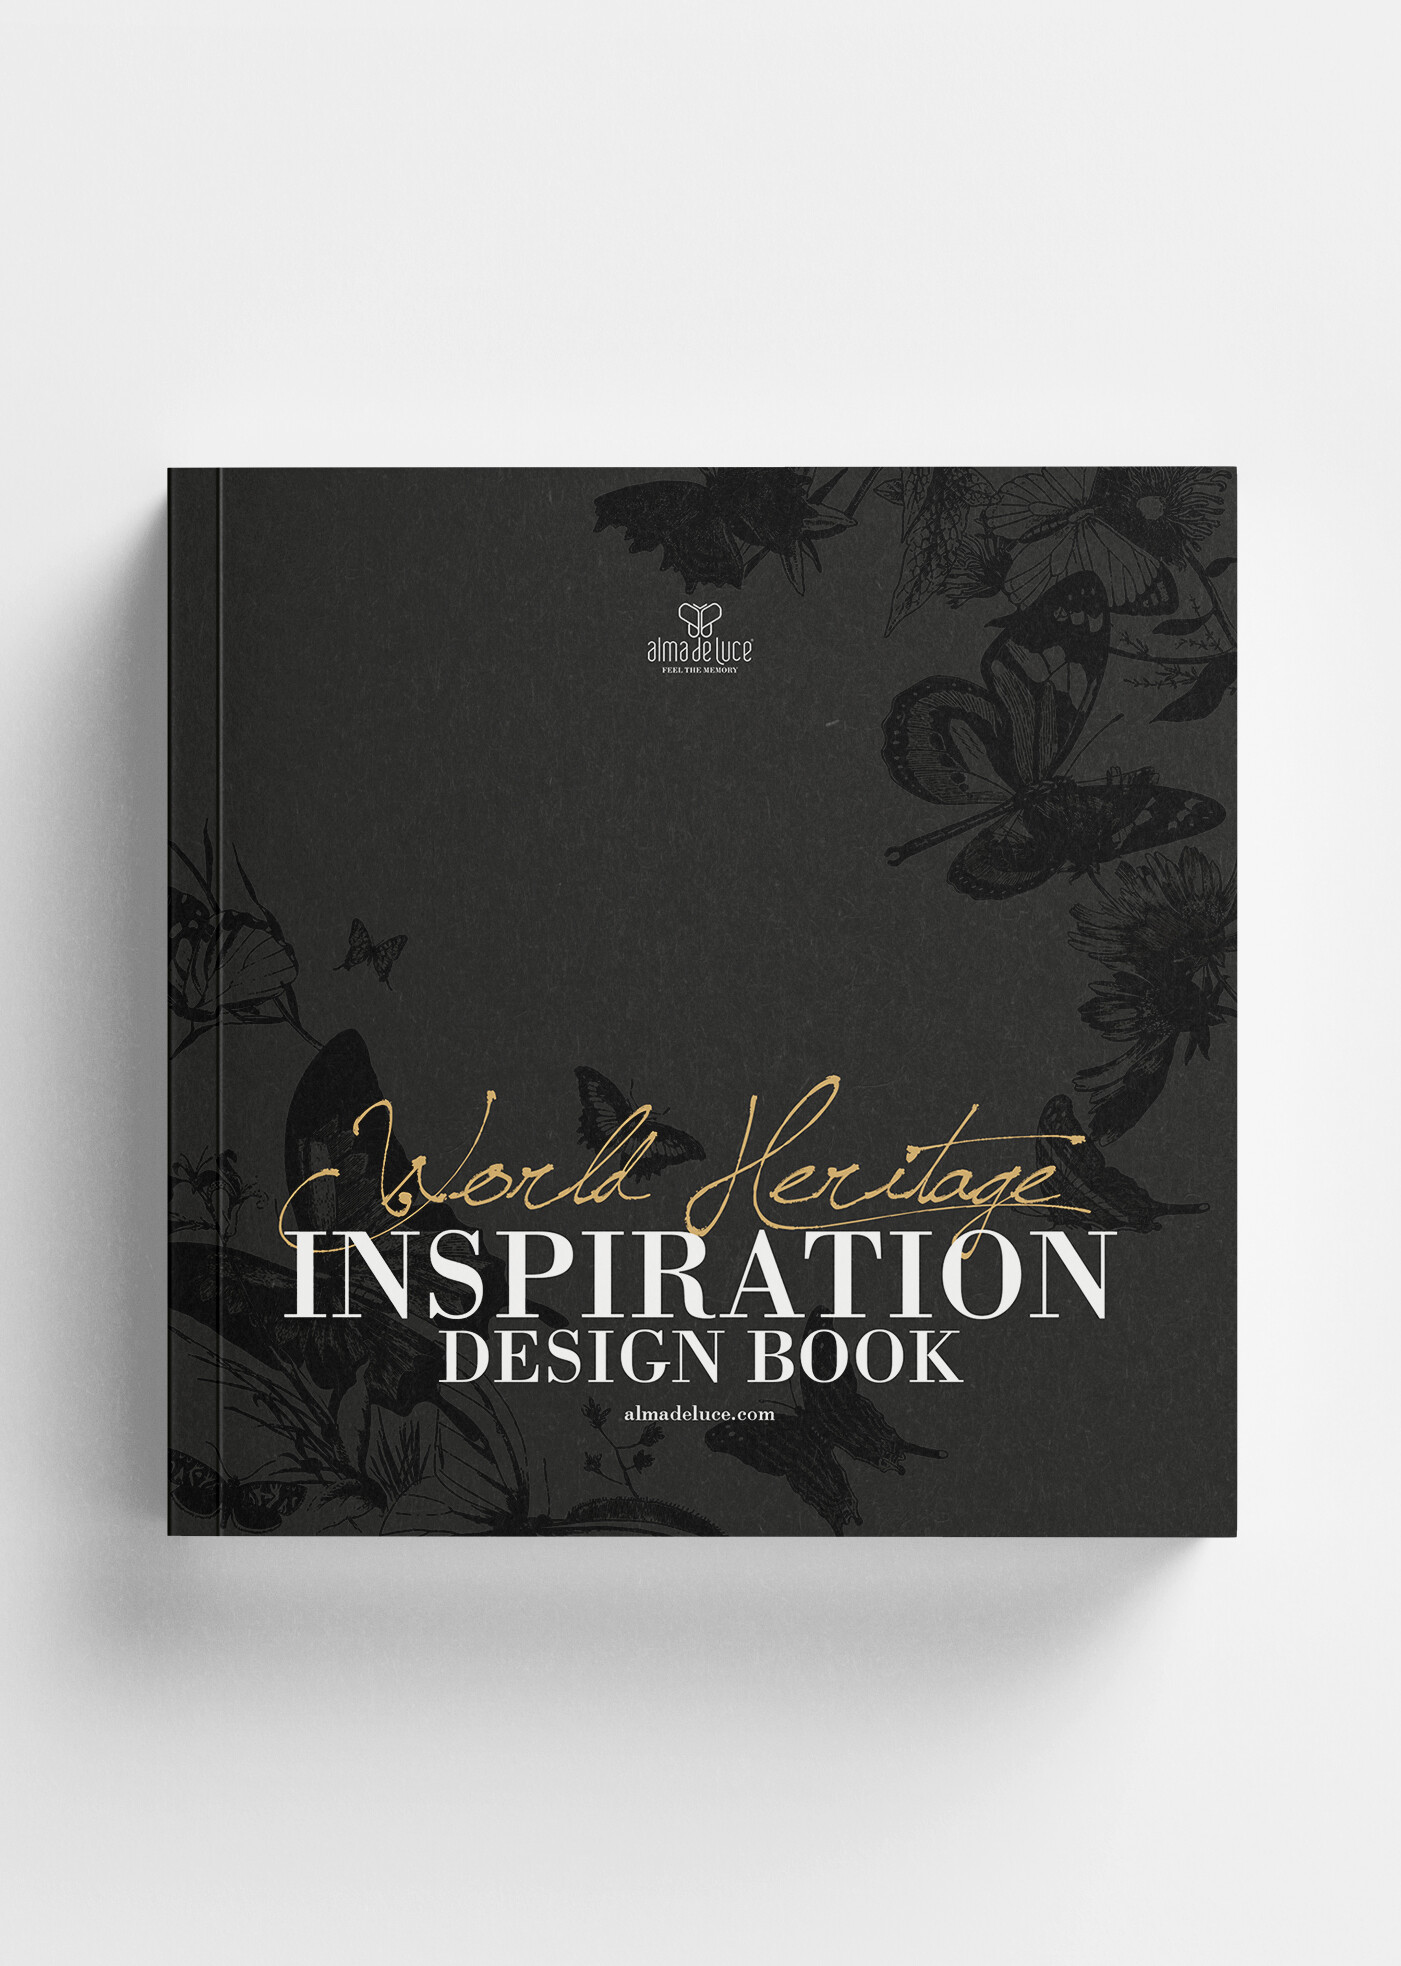 ALMAdeLUCE_INSPIRATION DESIGN BOOK 520x730